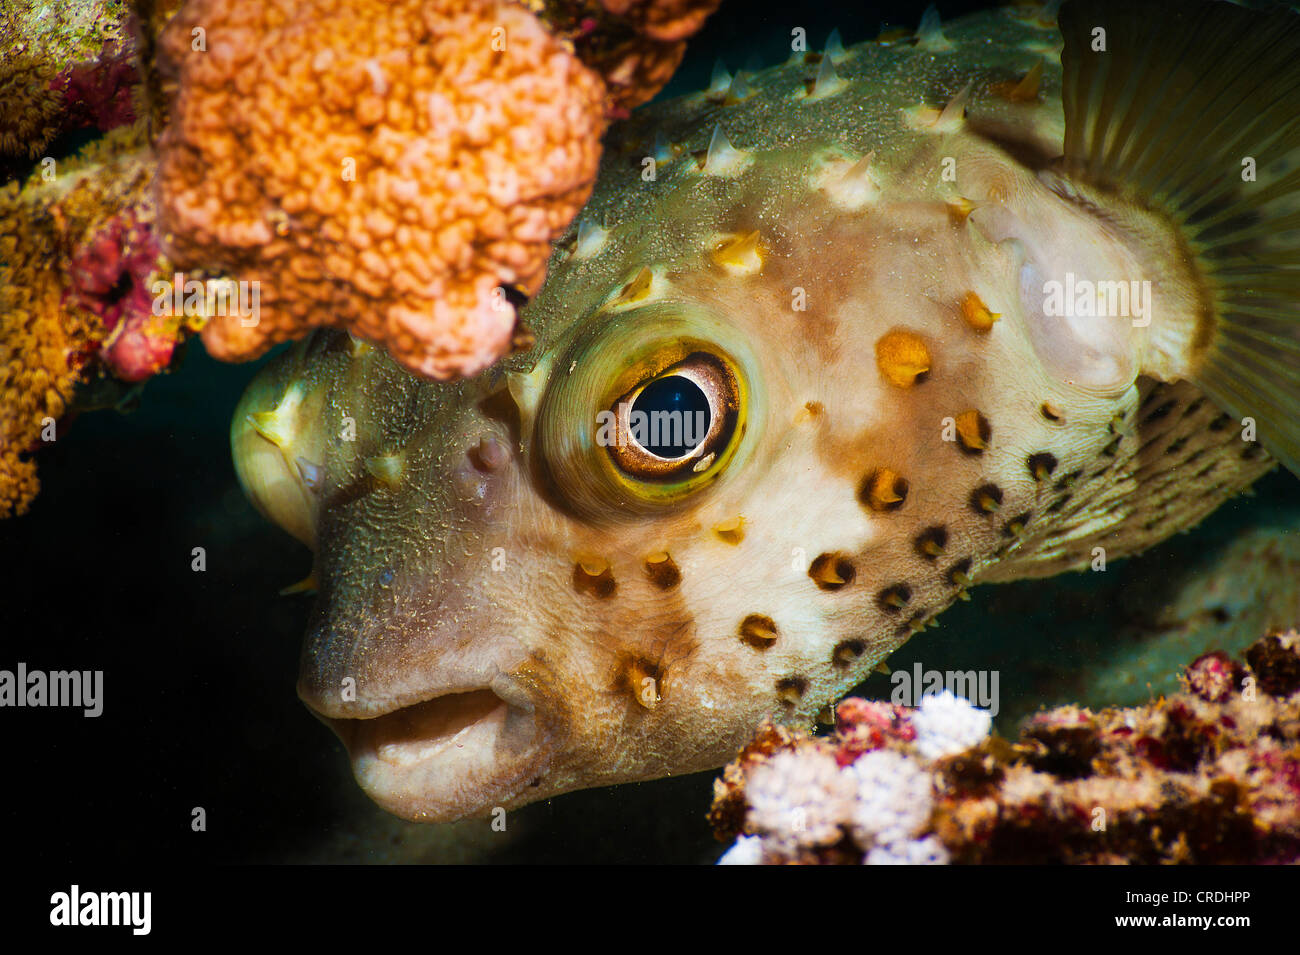 Puffer - peces globo (Tetraodontidae) - Tetraodontiformes - peces de aletas de rayos (Actinopterygii) - los peces (Pisces) - fauna Foto de stock